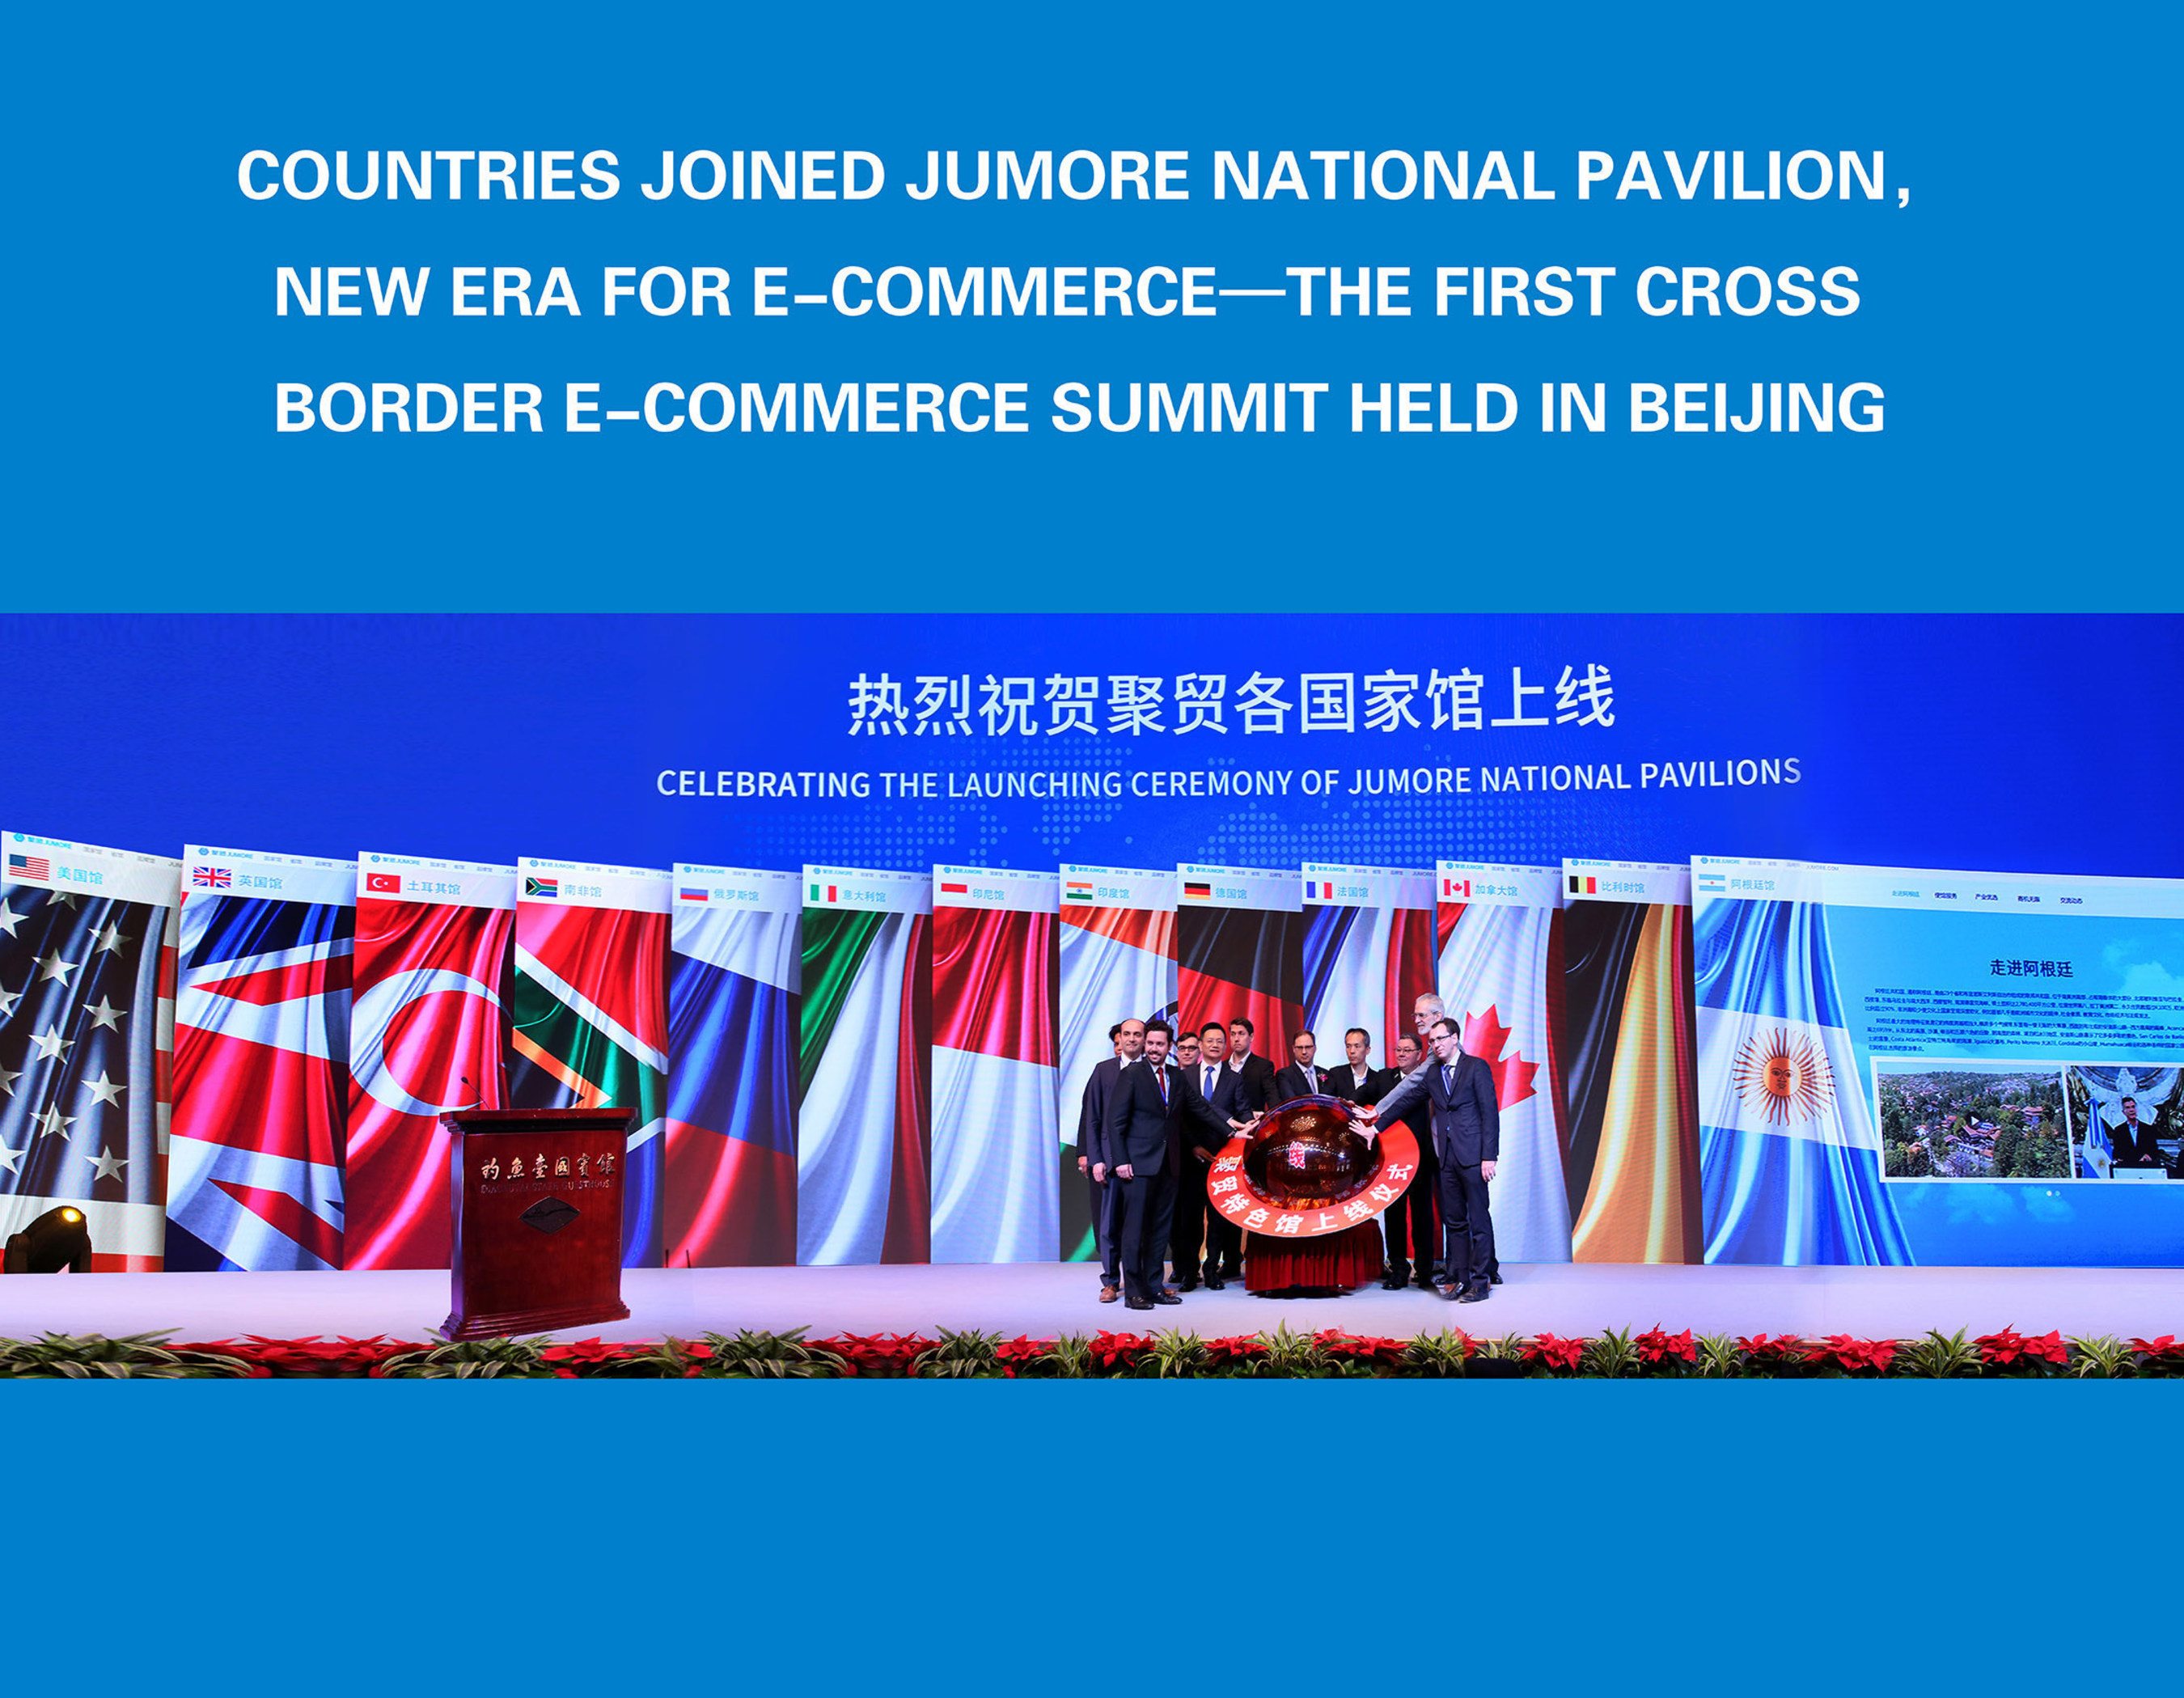 JUMORE National Pavilion Launching Ceremony